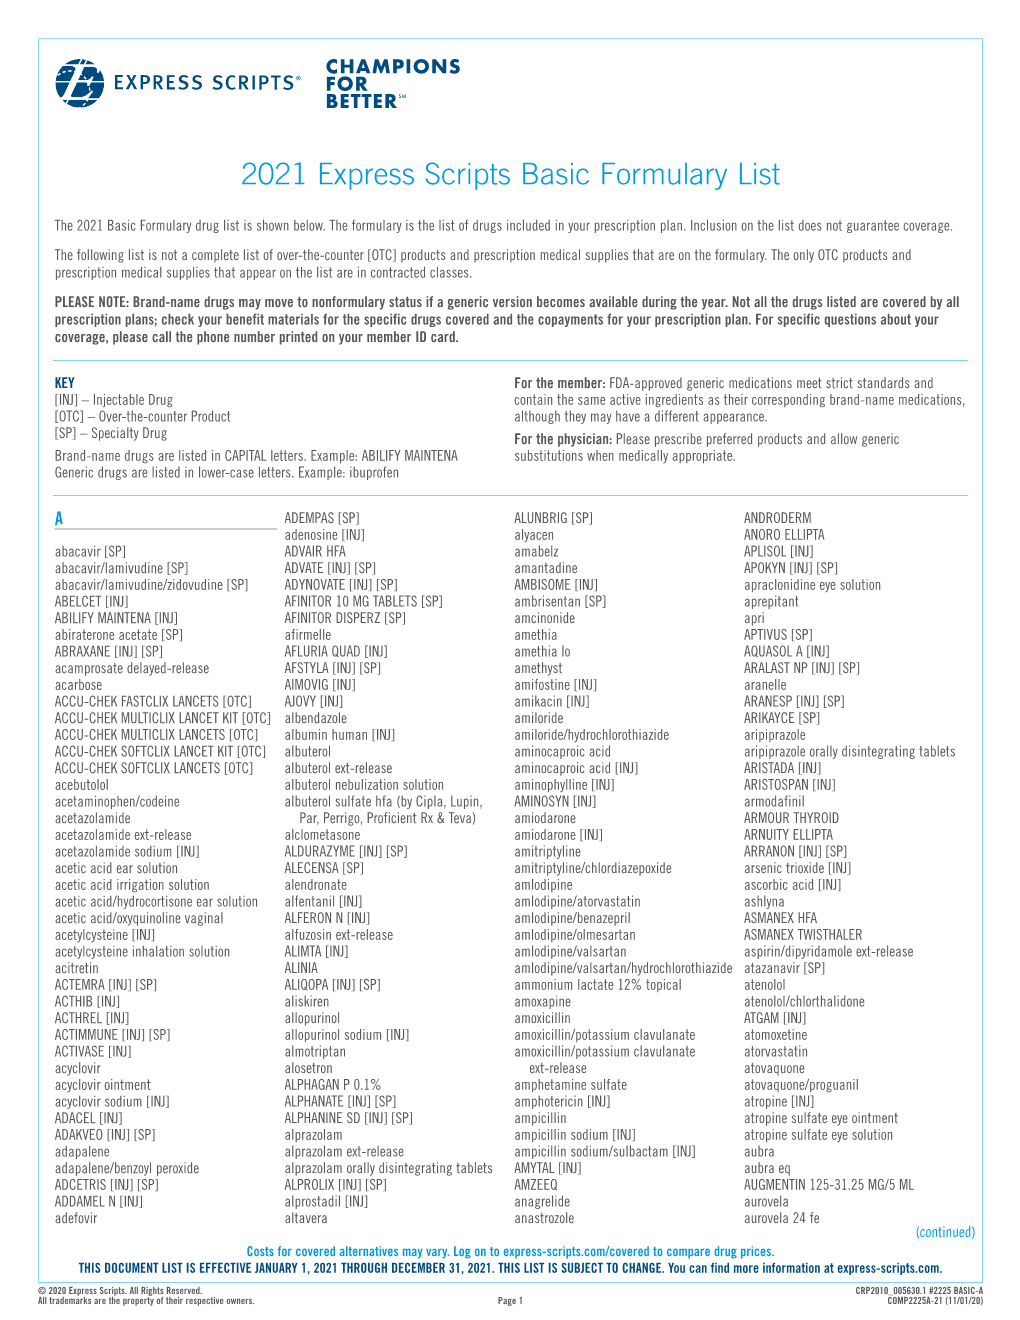 Express Scripts 2021 Basic Formulary List